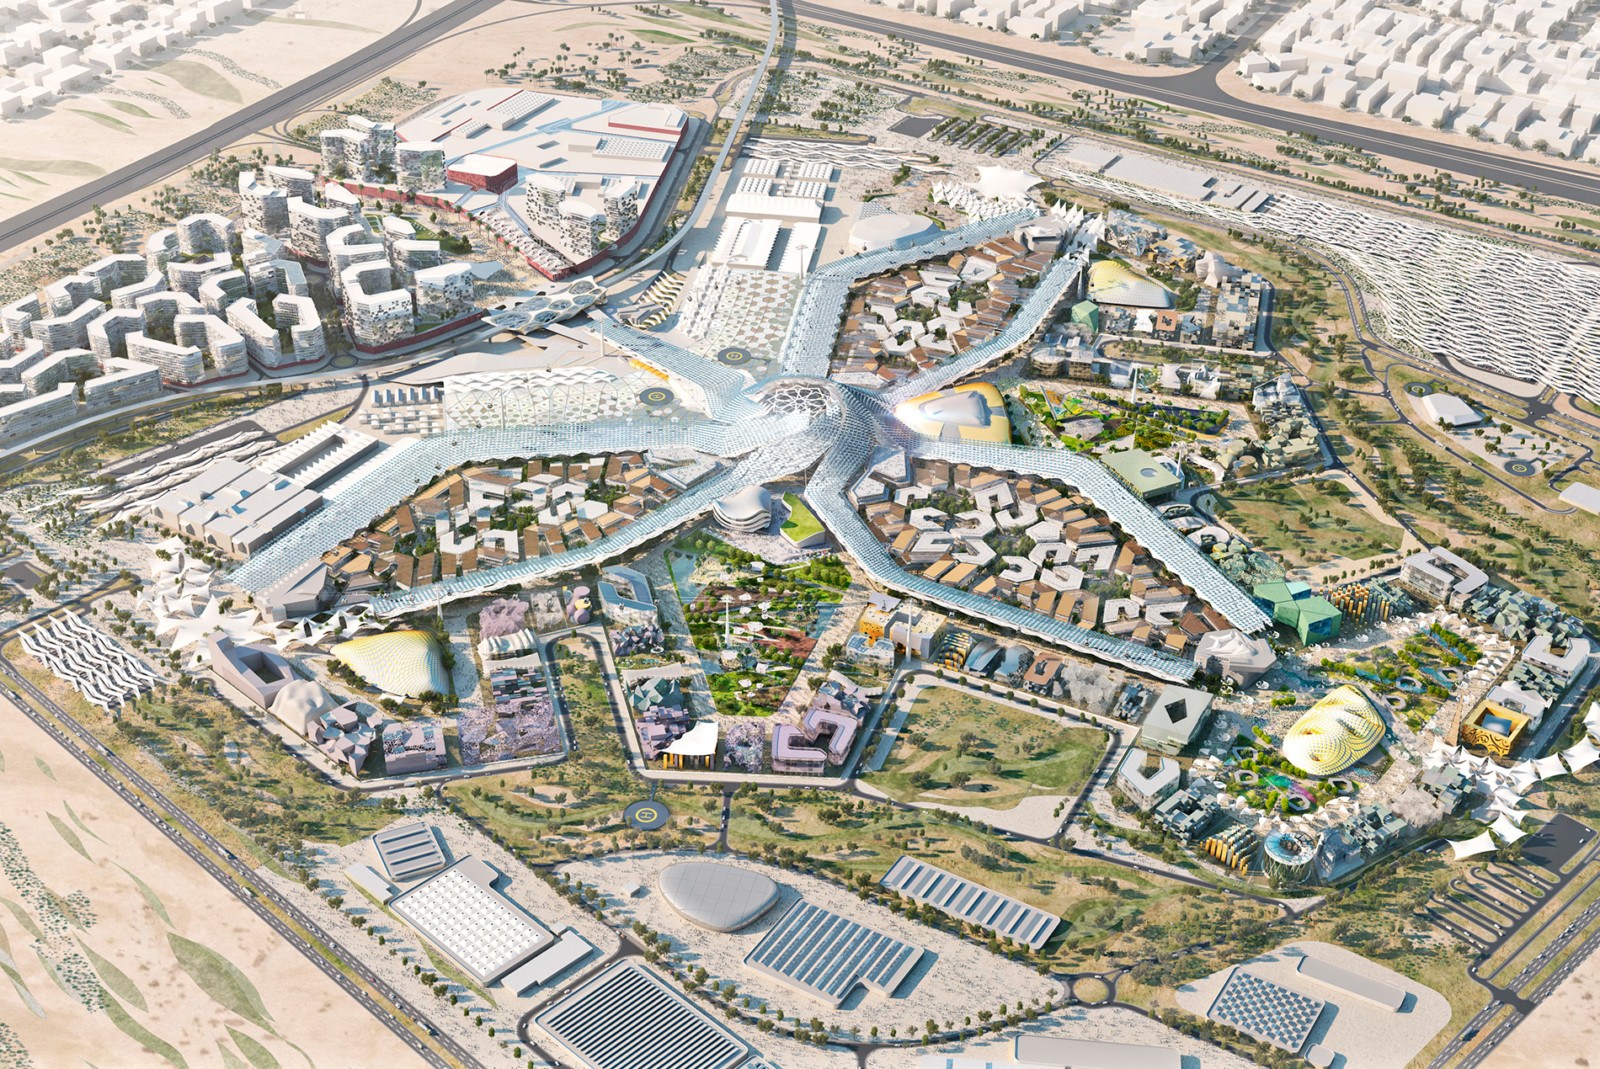 Dubai Expo 2020 Master Plan AERIAL 1900 1600x1069 